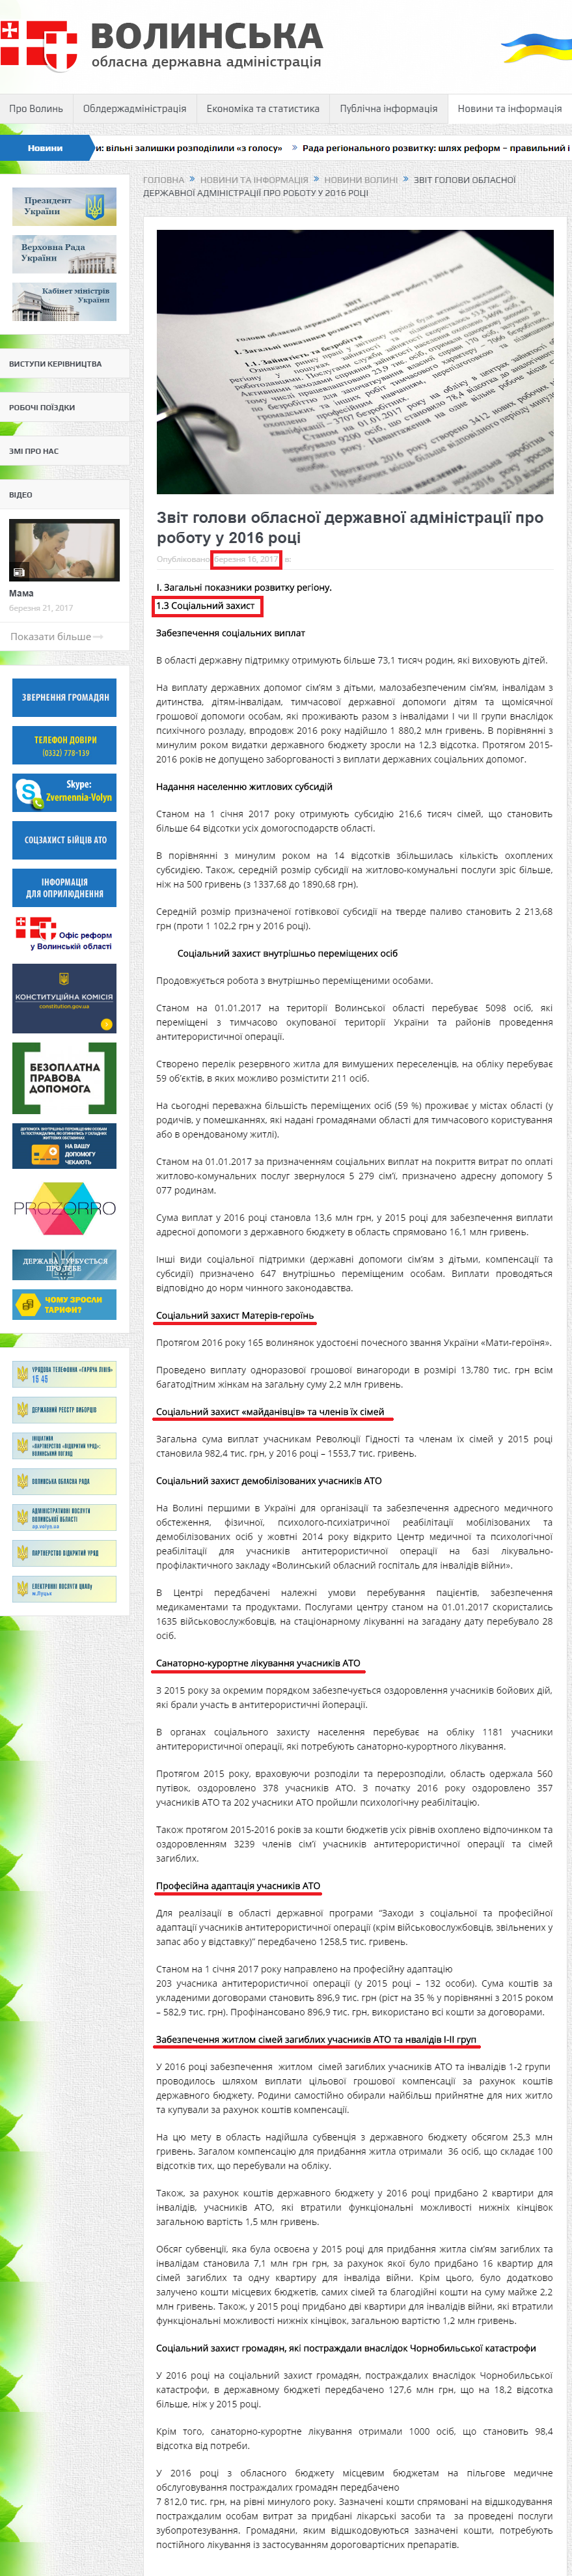 http://voladm.gov.ua/zvit-golovi-oblasno%D1%97-derzhavno%D1%97-administraci%D1%97-pro-robotu-u-2016-roci/